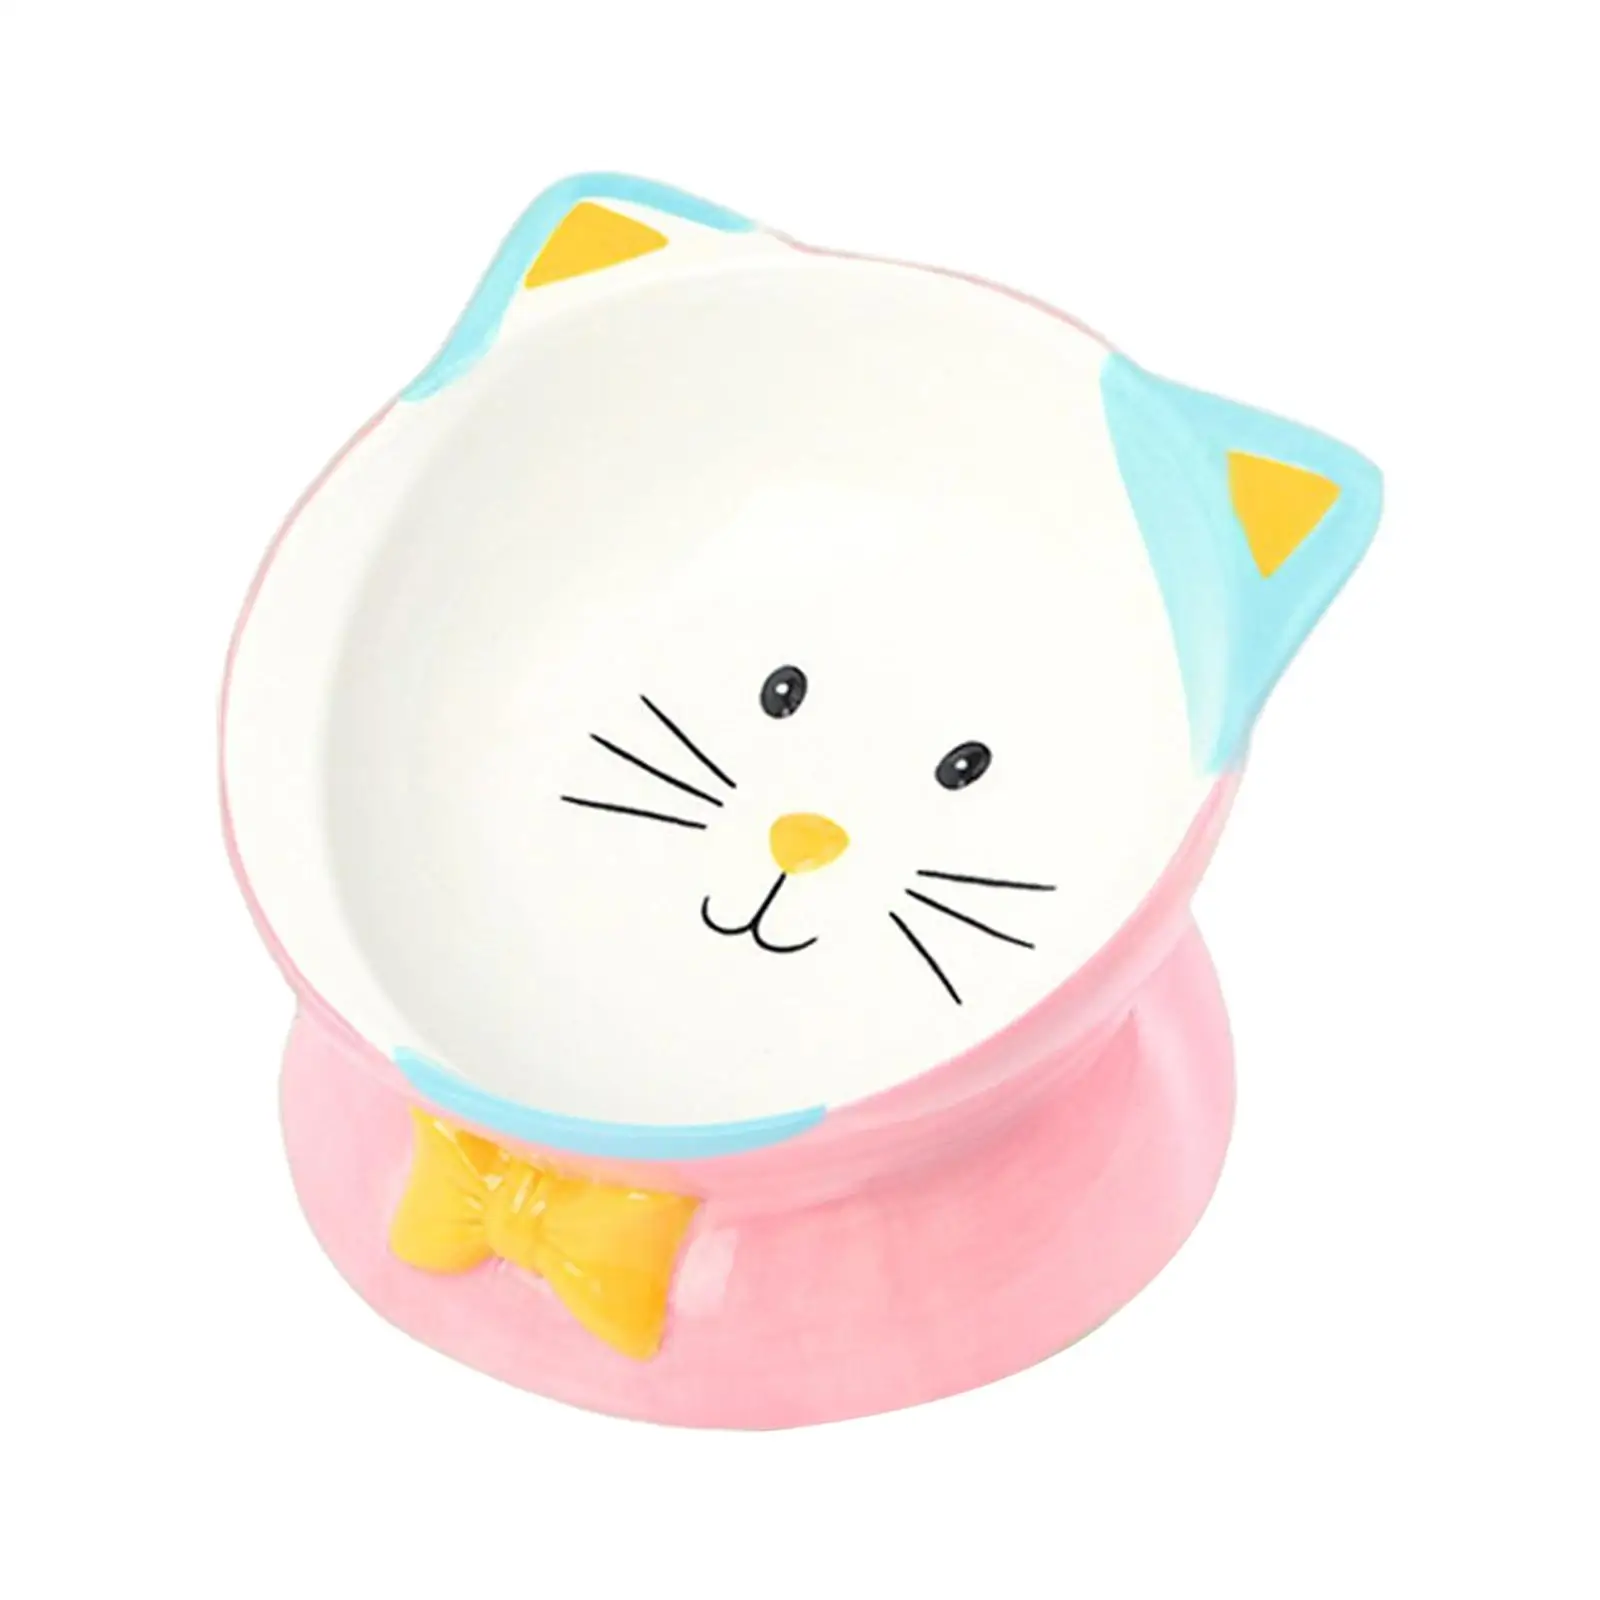 Elevated Cat Food Bowl Pet Feeding Bowl Drinking Water Bowl Ceramic Raised